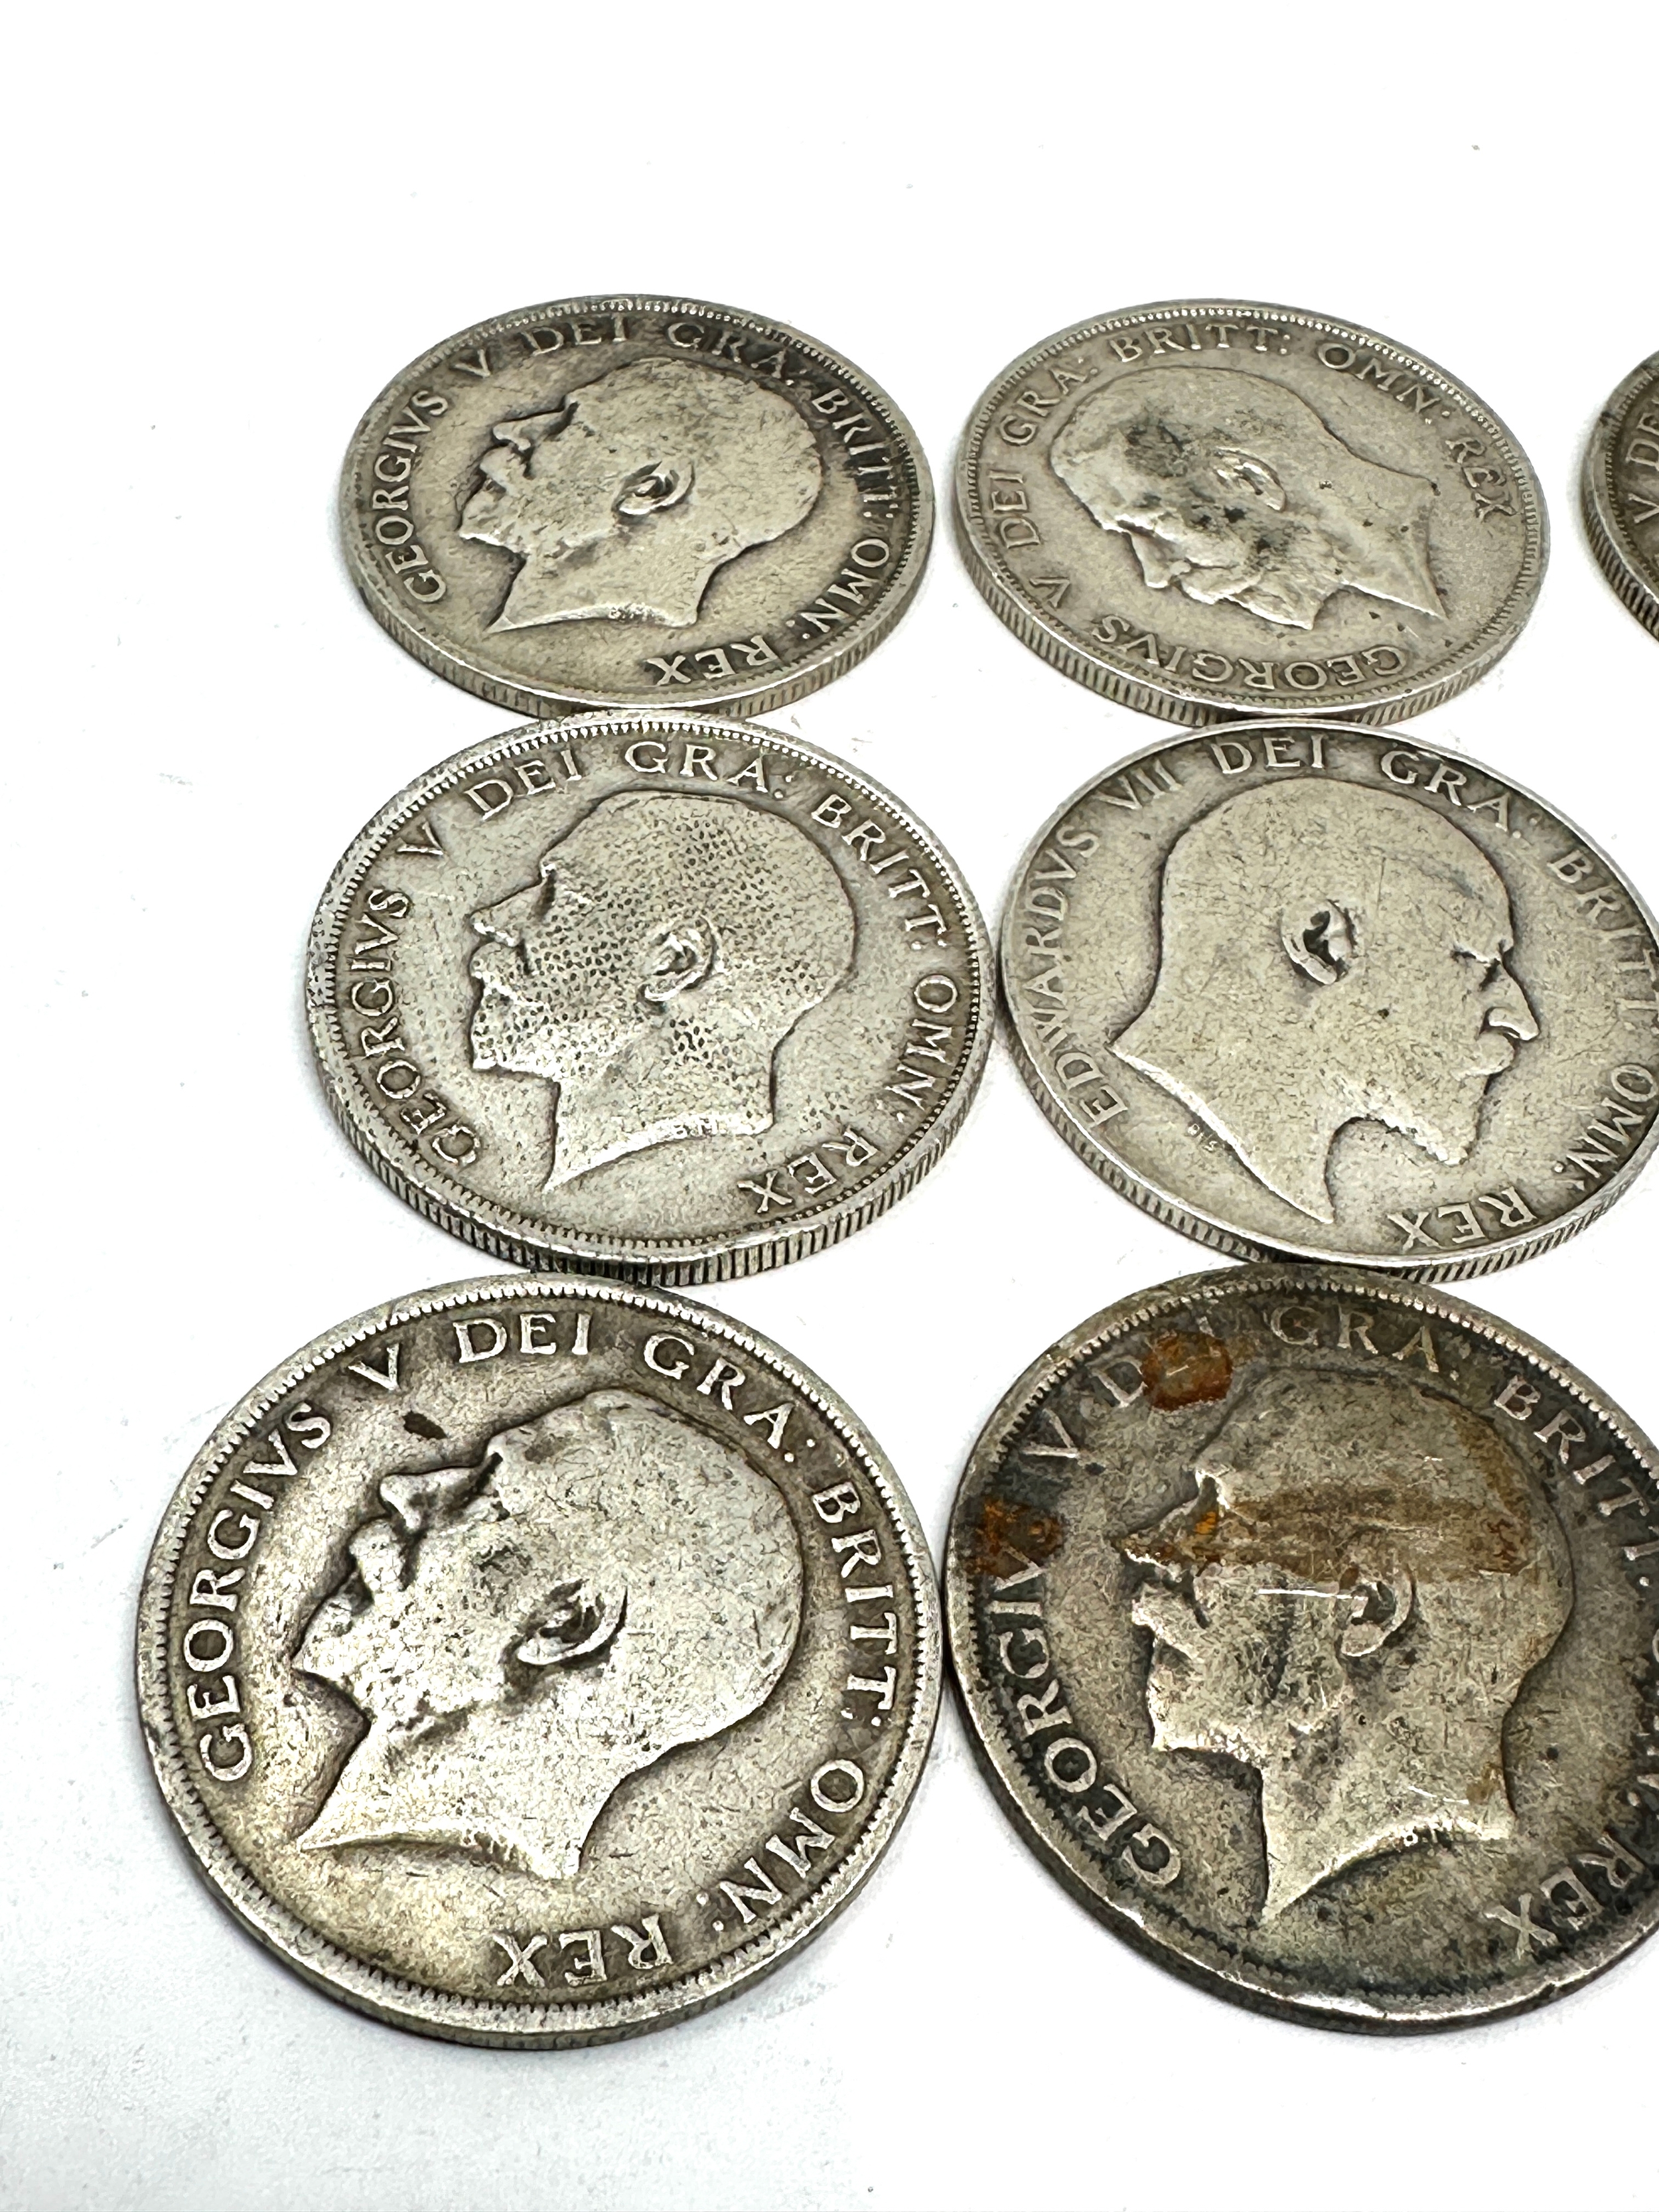 9 antique george v silver half crowns - Image 2 of 4